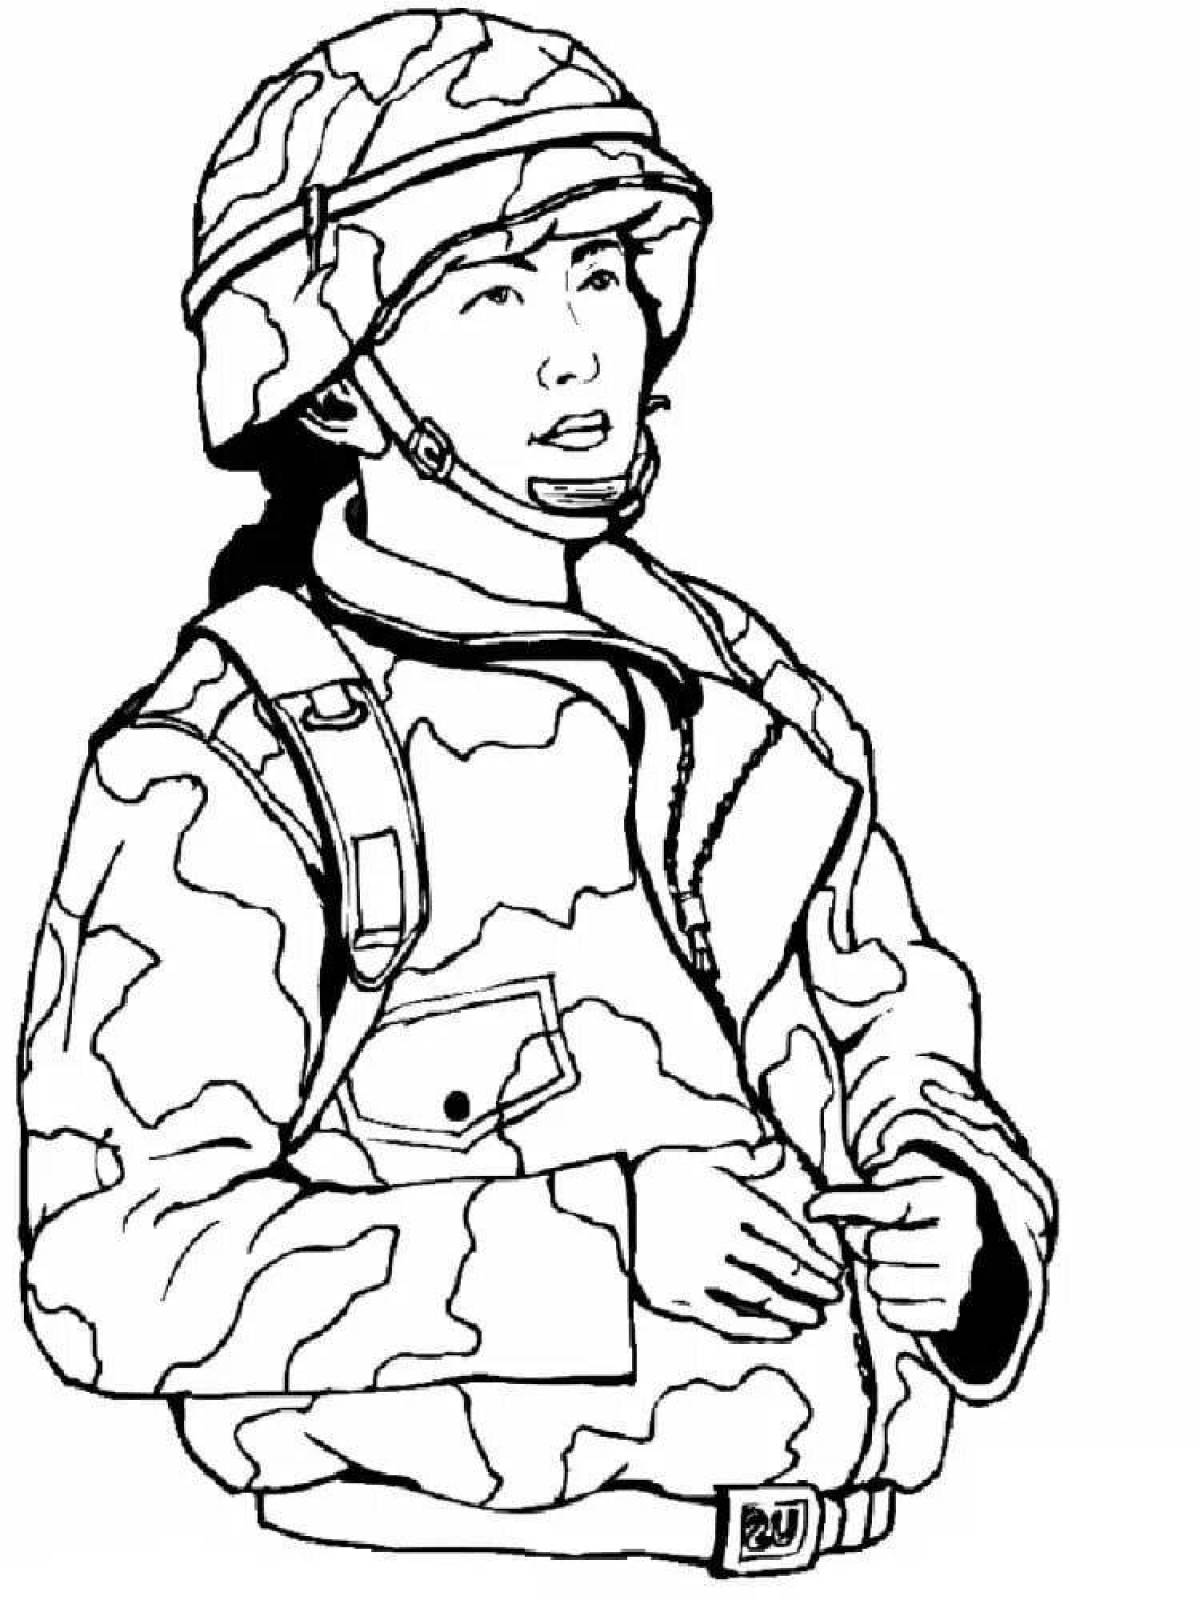 Military drawings #2